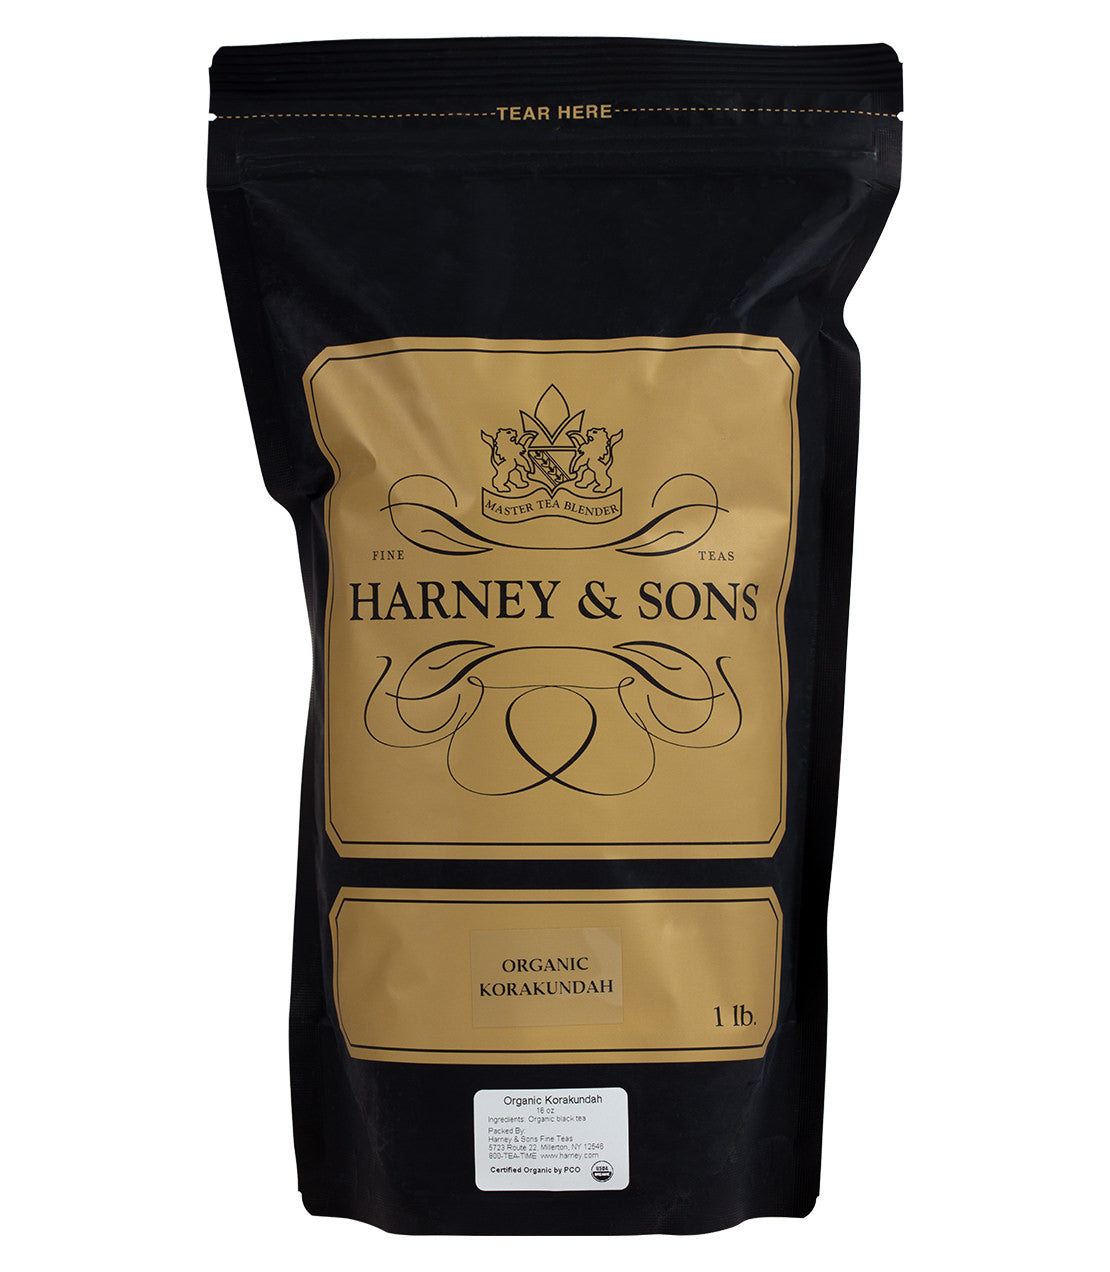 Organic Korakundah FOP - Loose 1 lb. Bag - Harney & Sons Fine Teas